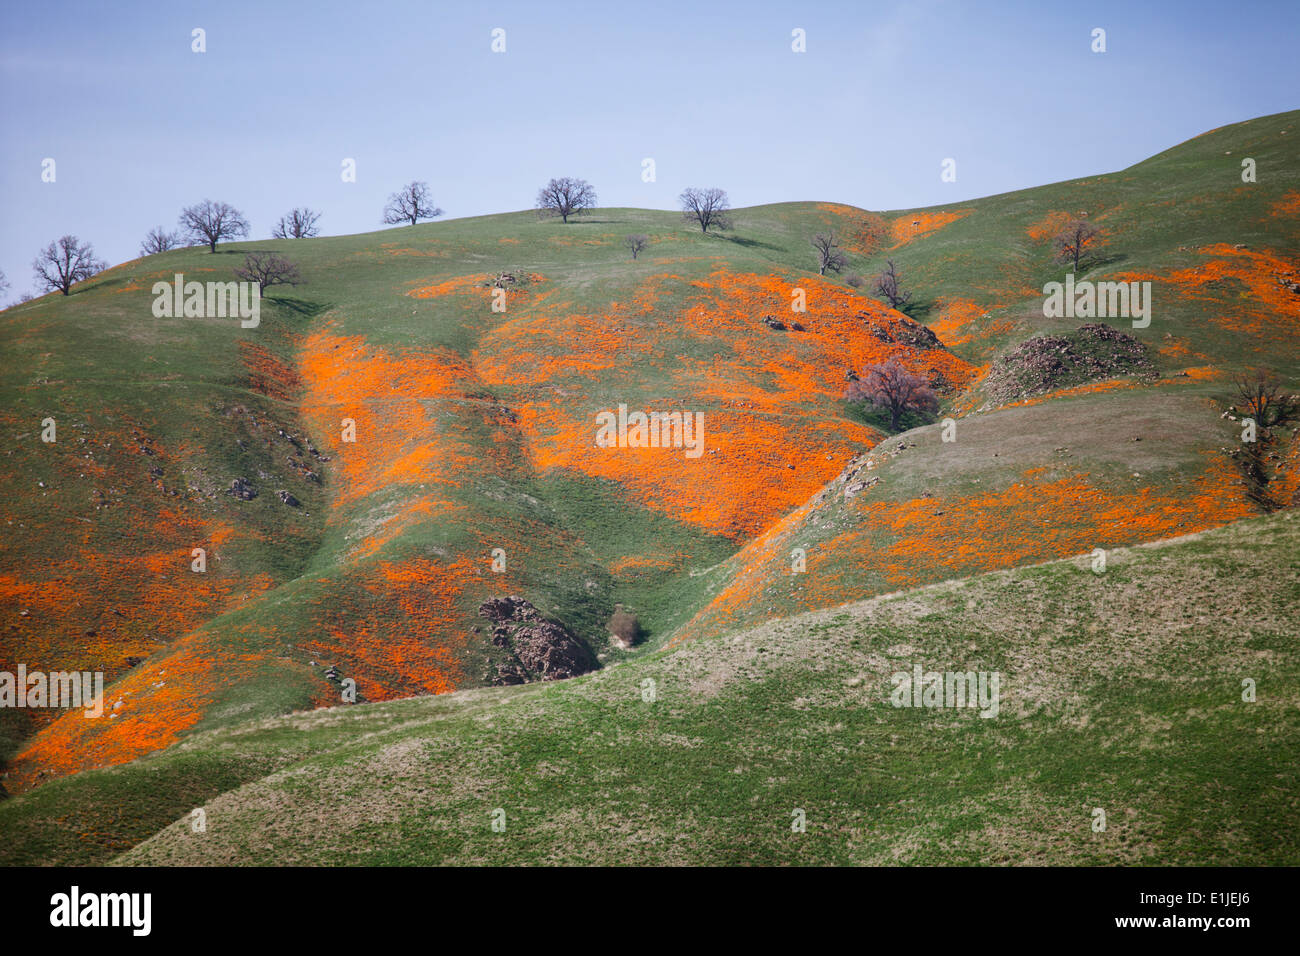 Ondulantes colinas, California, EE.UU. Foto de stock